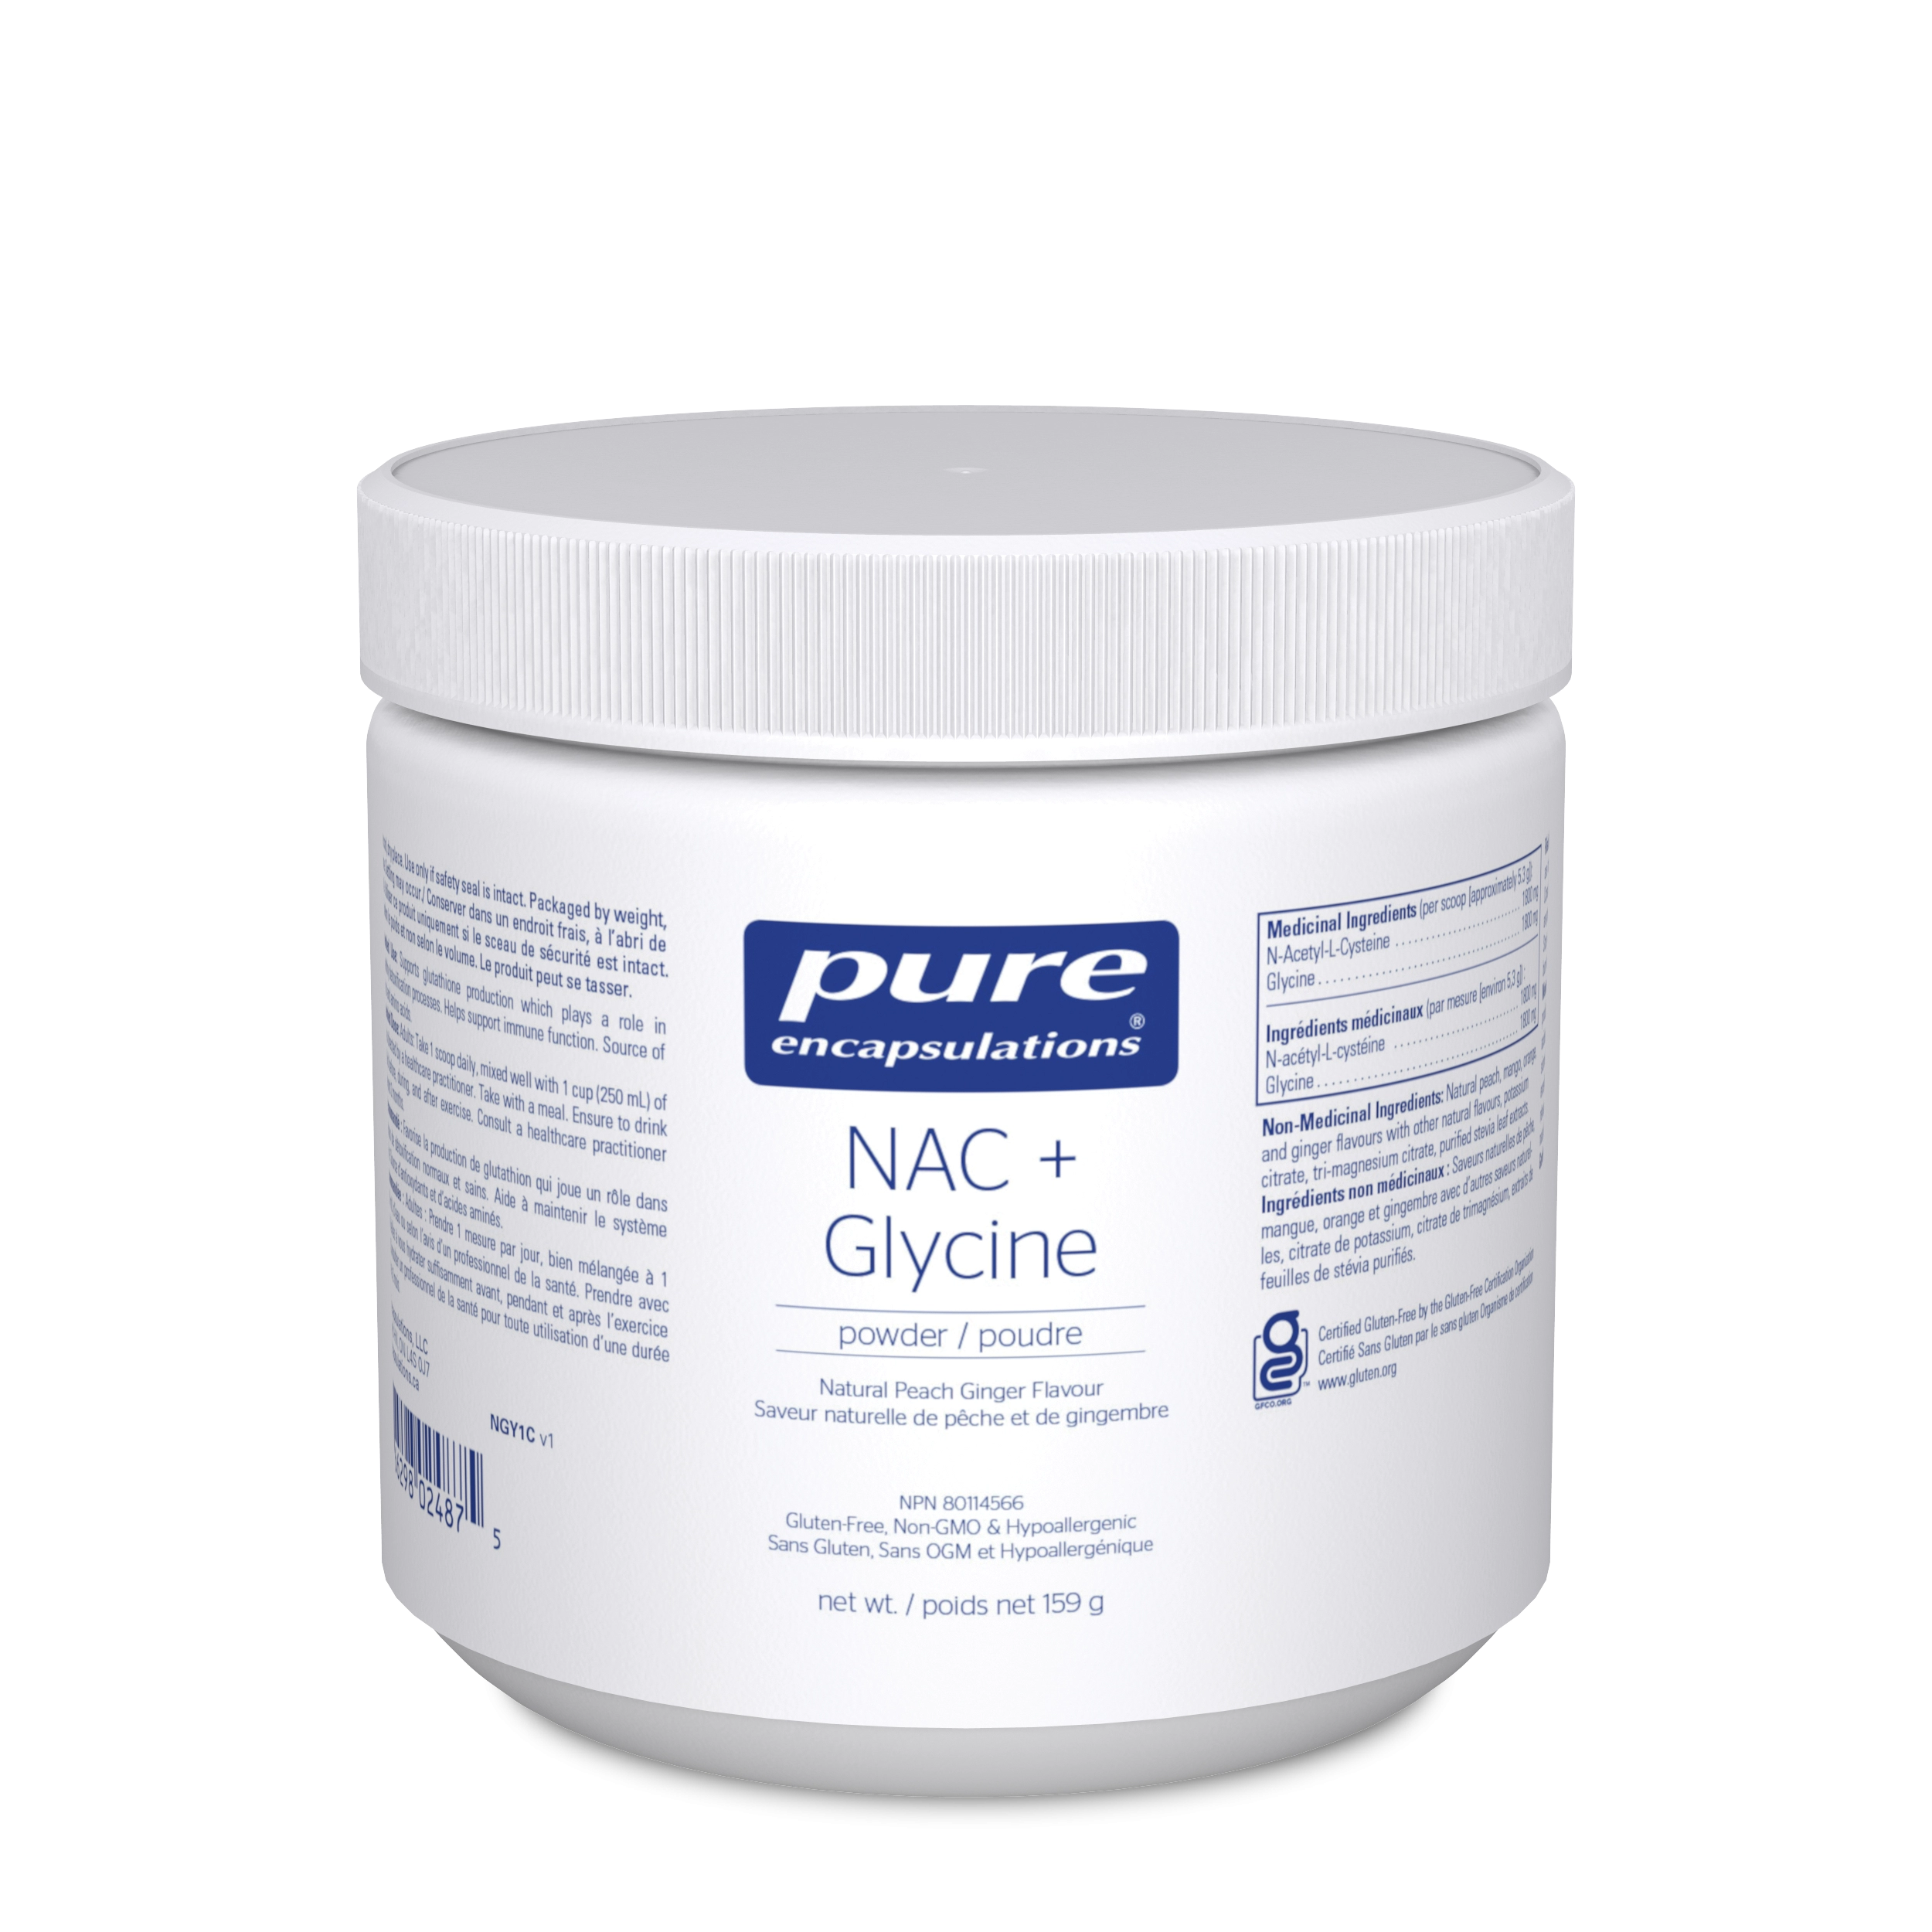 NAC + Glycine powder 159 g. Supports glutathione production, immune defense and detoxification